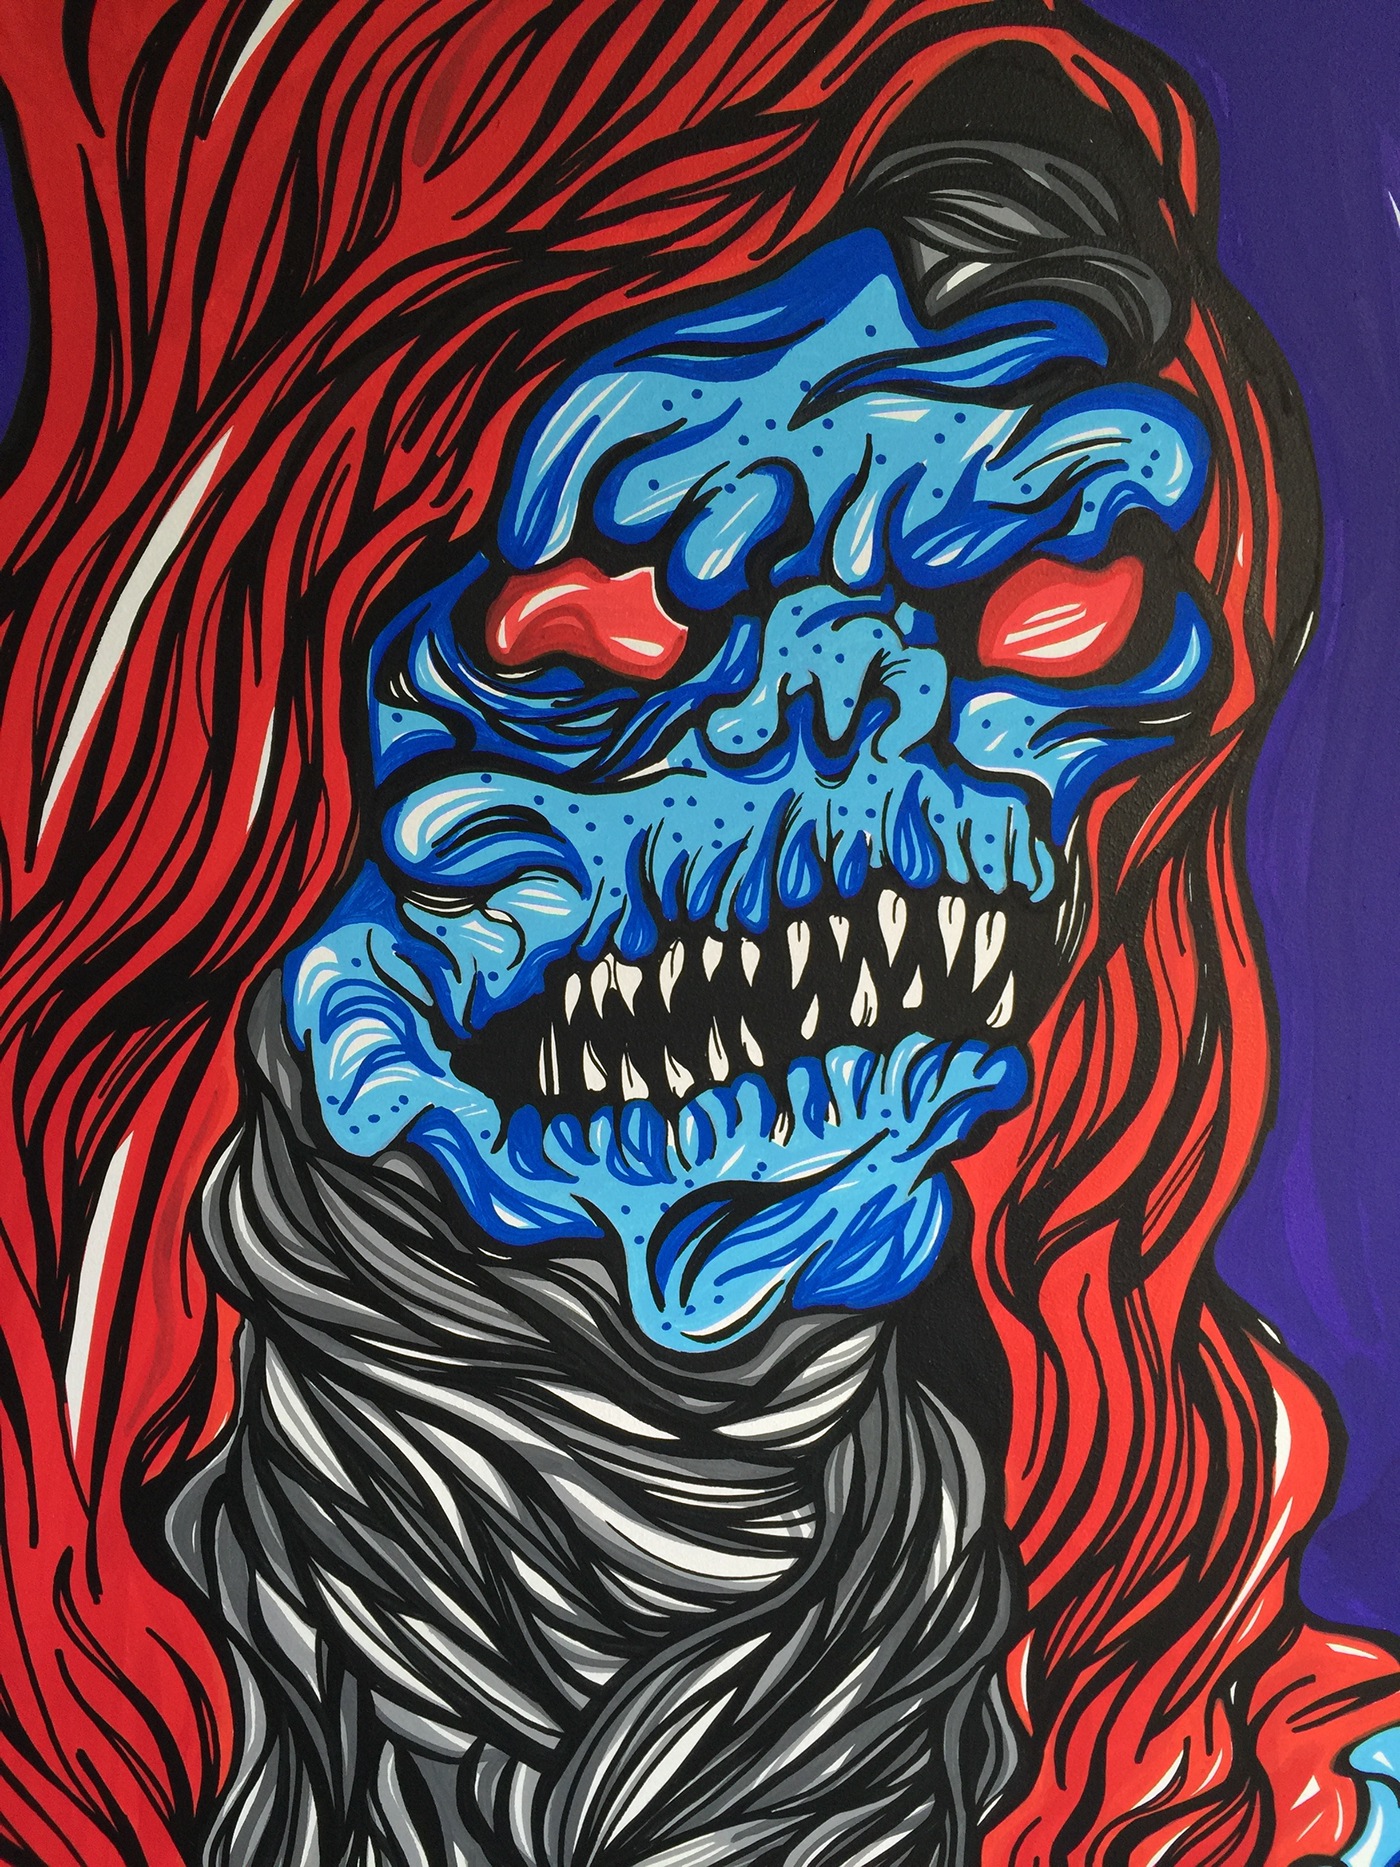 mummra thundercats demon Spirits evil Ancient zombie mummy nightmaremikey Posca Marker acrylic paint